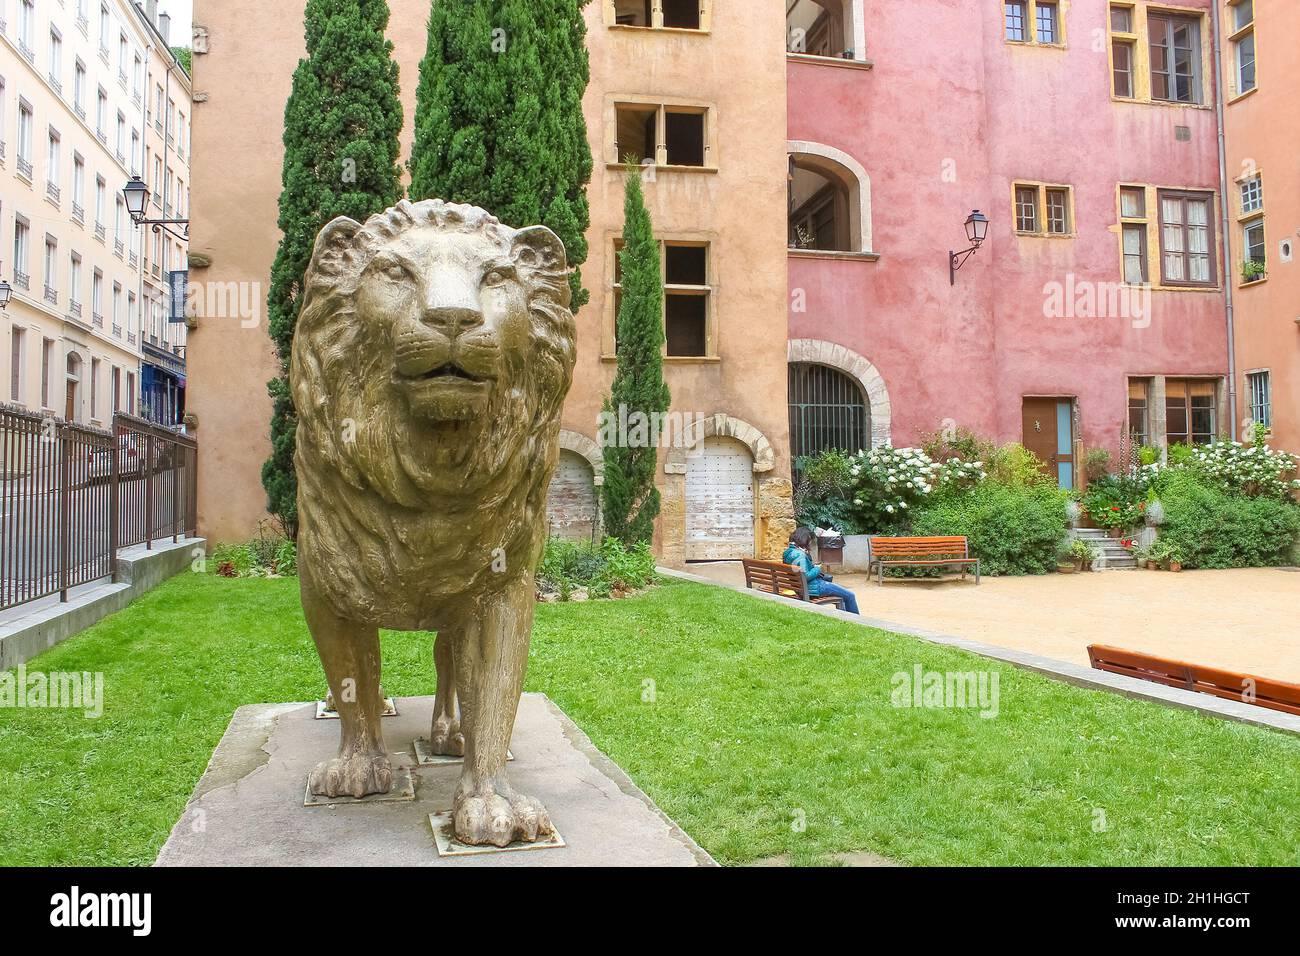 Lion, France - June 16, 2716: Lion statue at street at Lion, France on June 16, 2716 Stock Photo